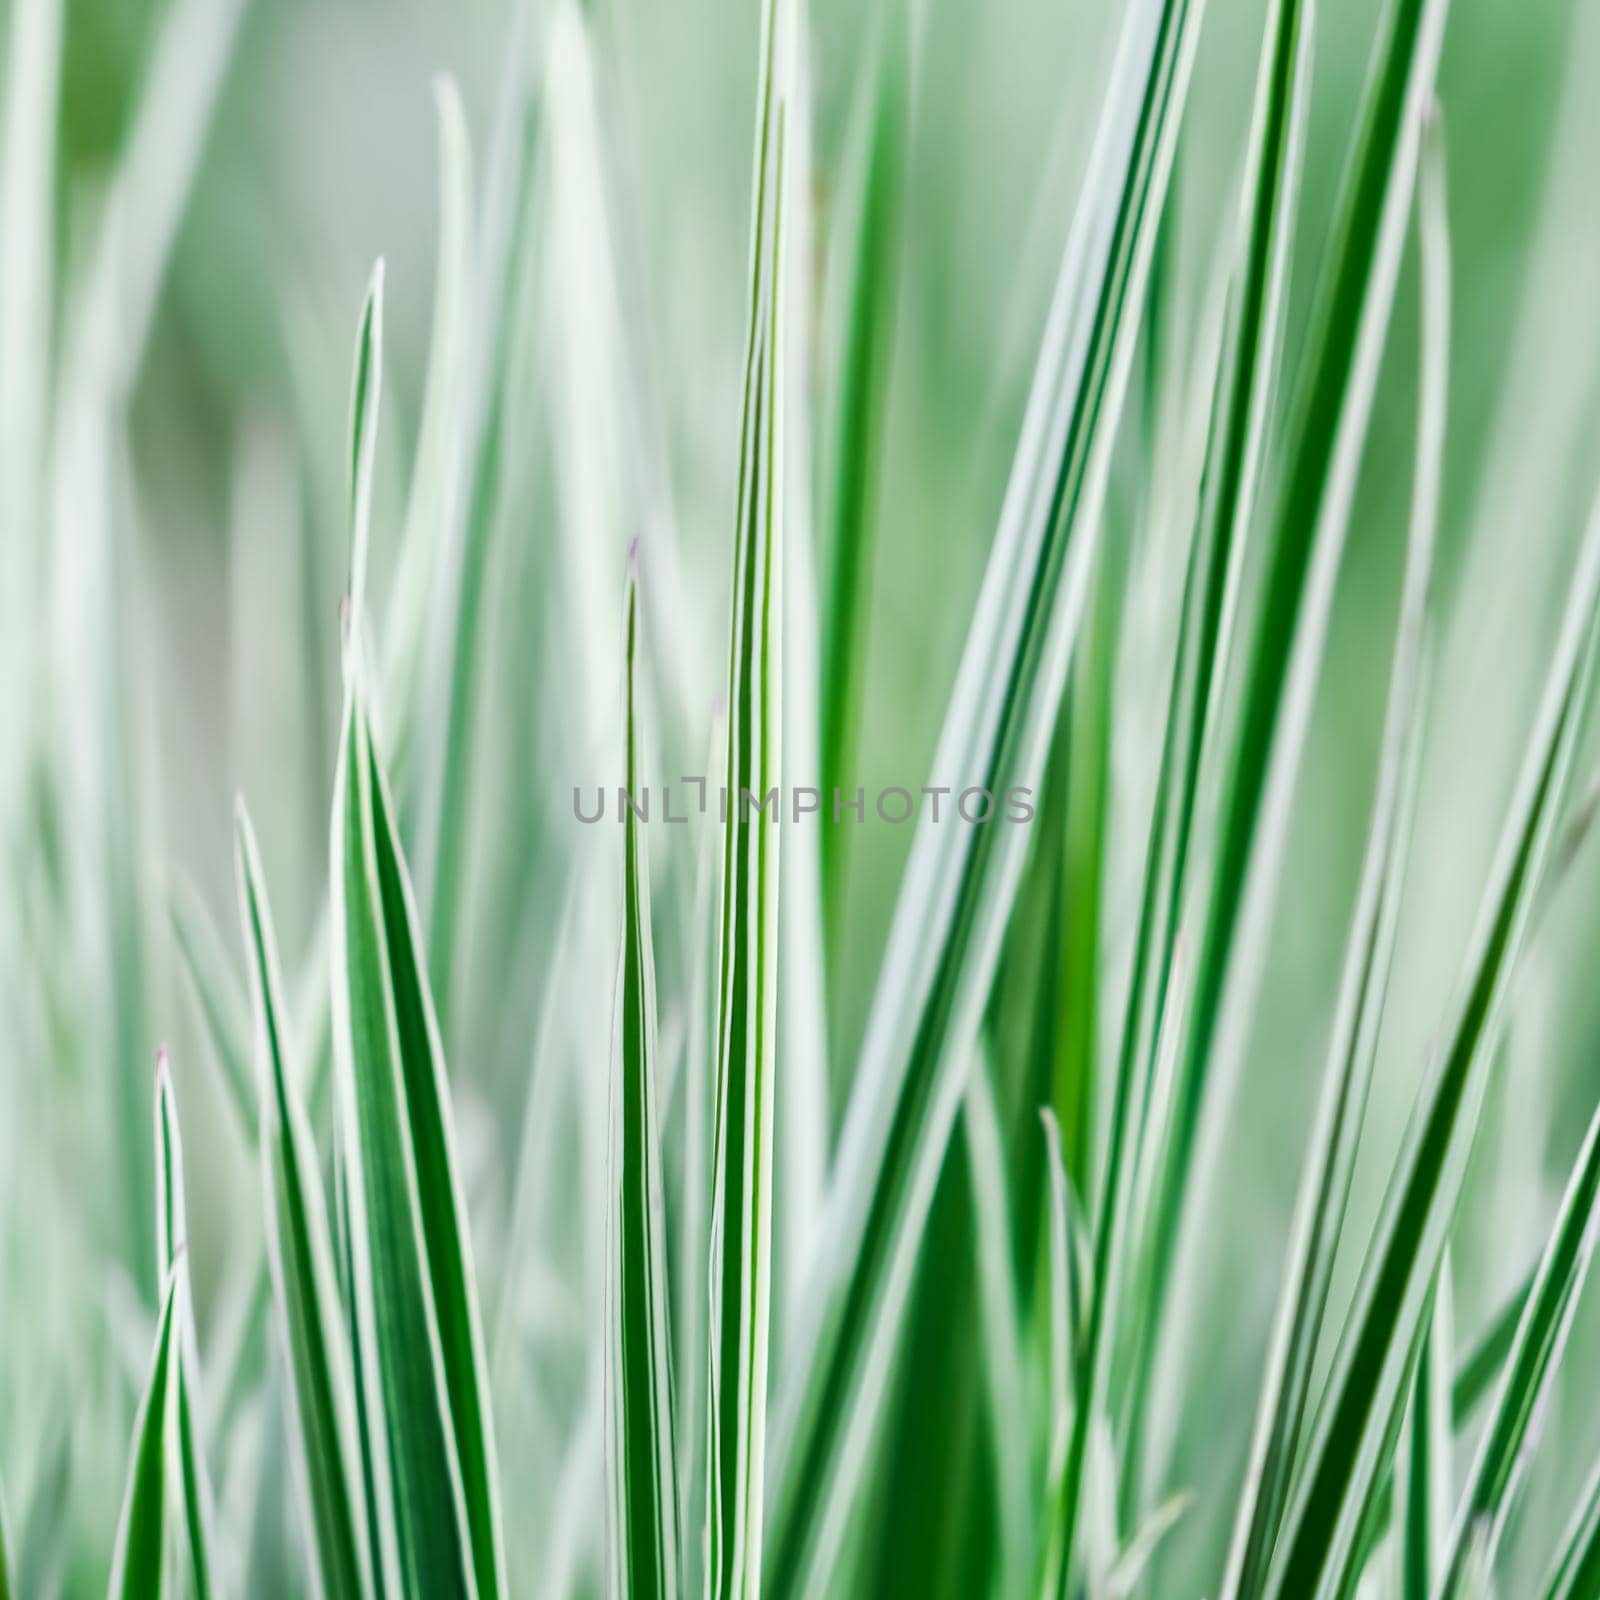 Decorative green and white striped grass. Arrhenatherum elatius bulbosum variegatum. Soft focus. Natural background.